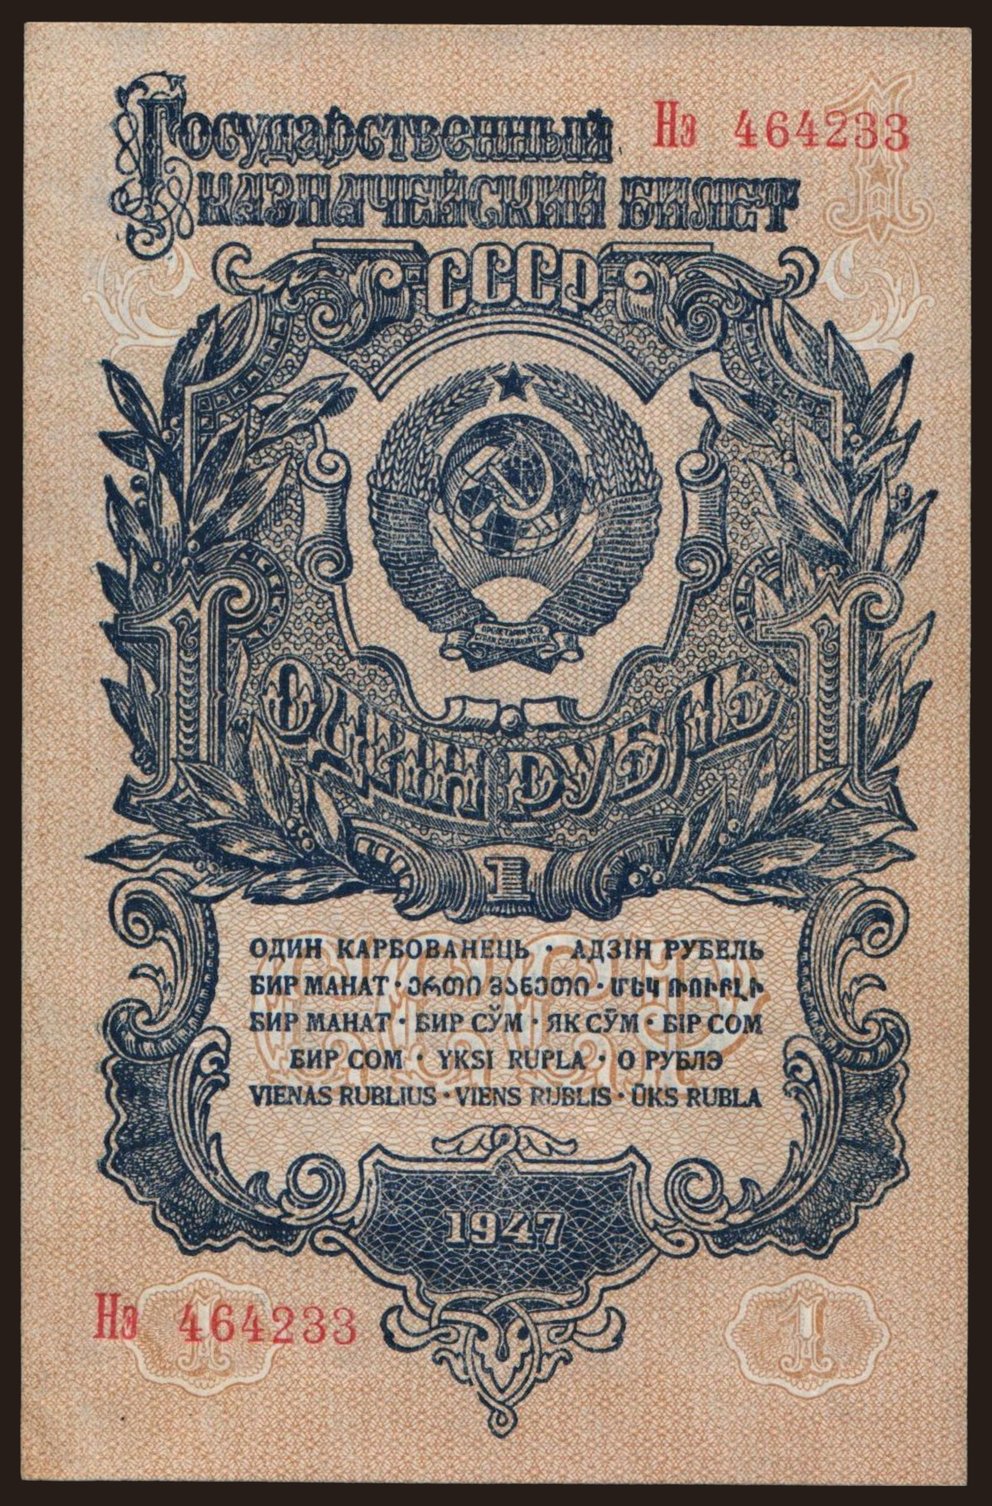 1 rubel, 1947